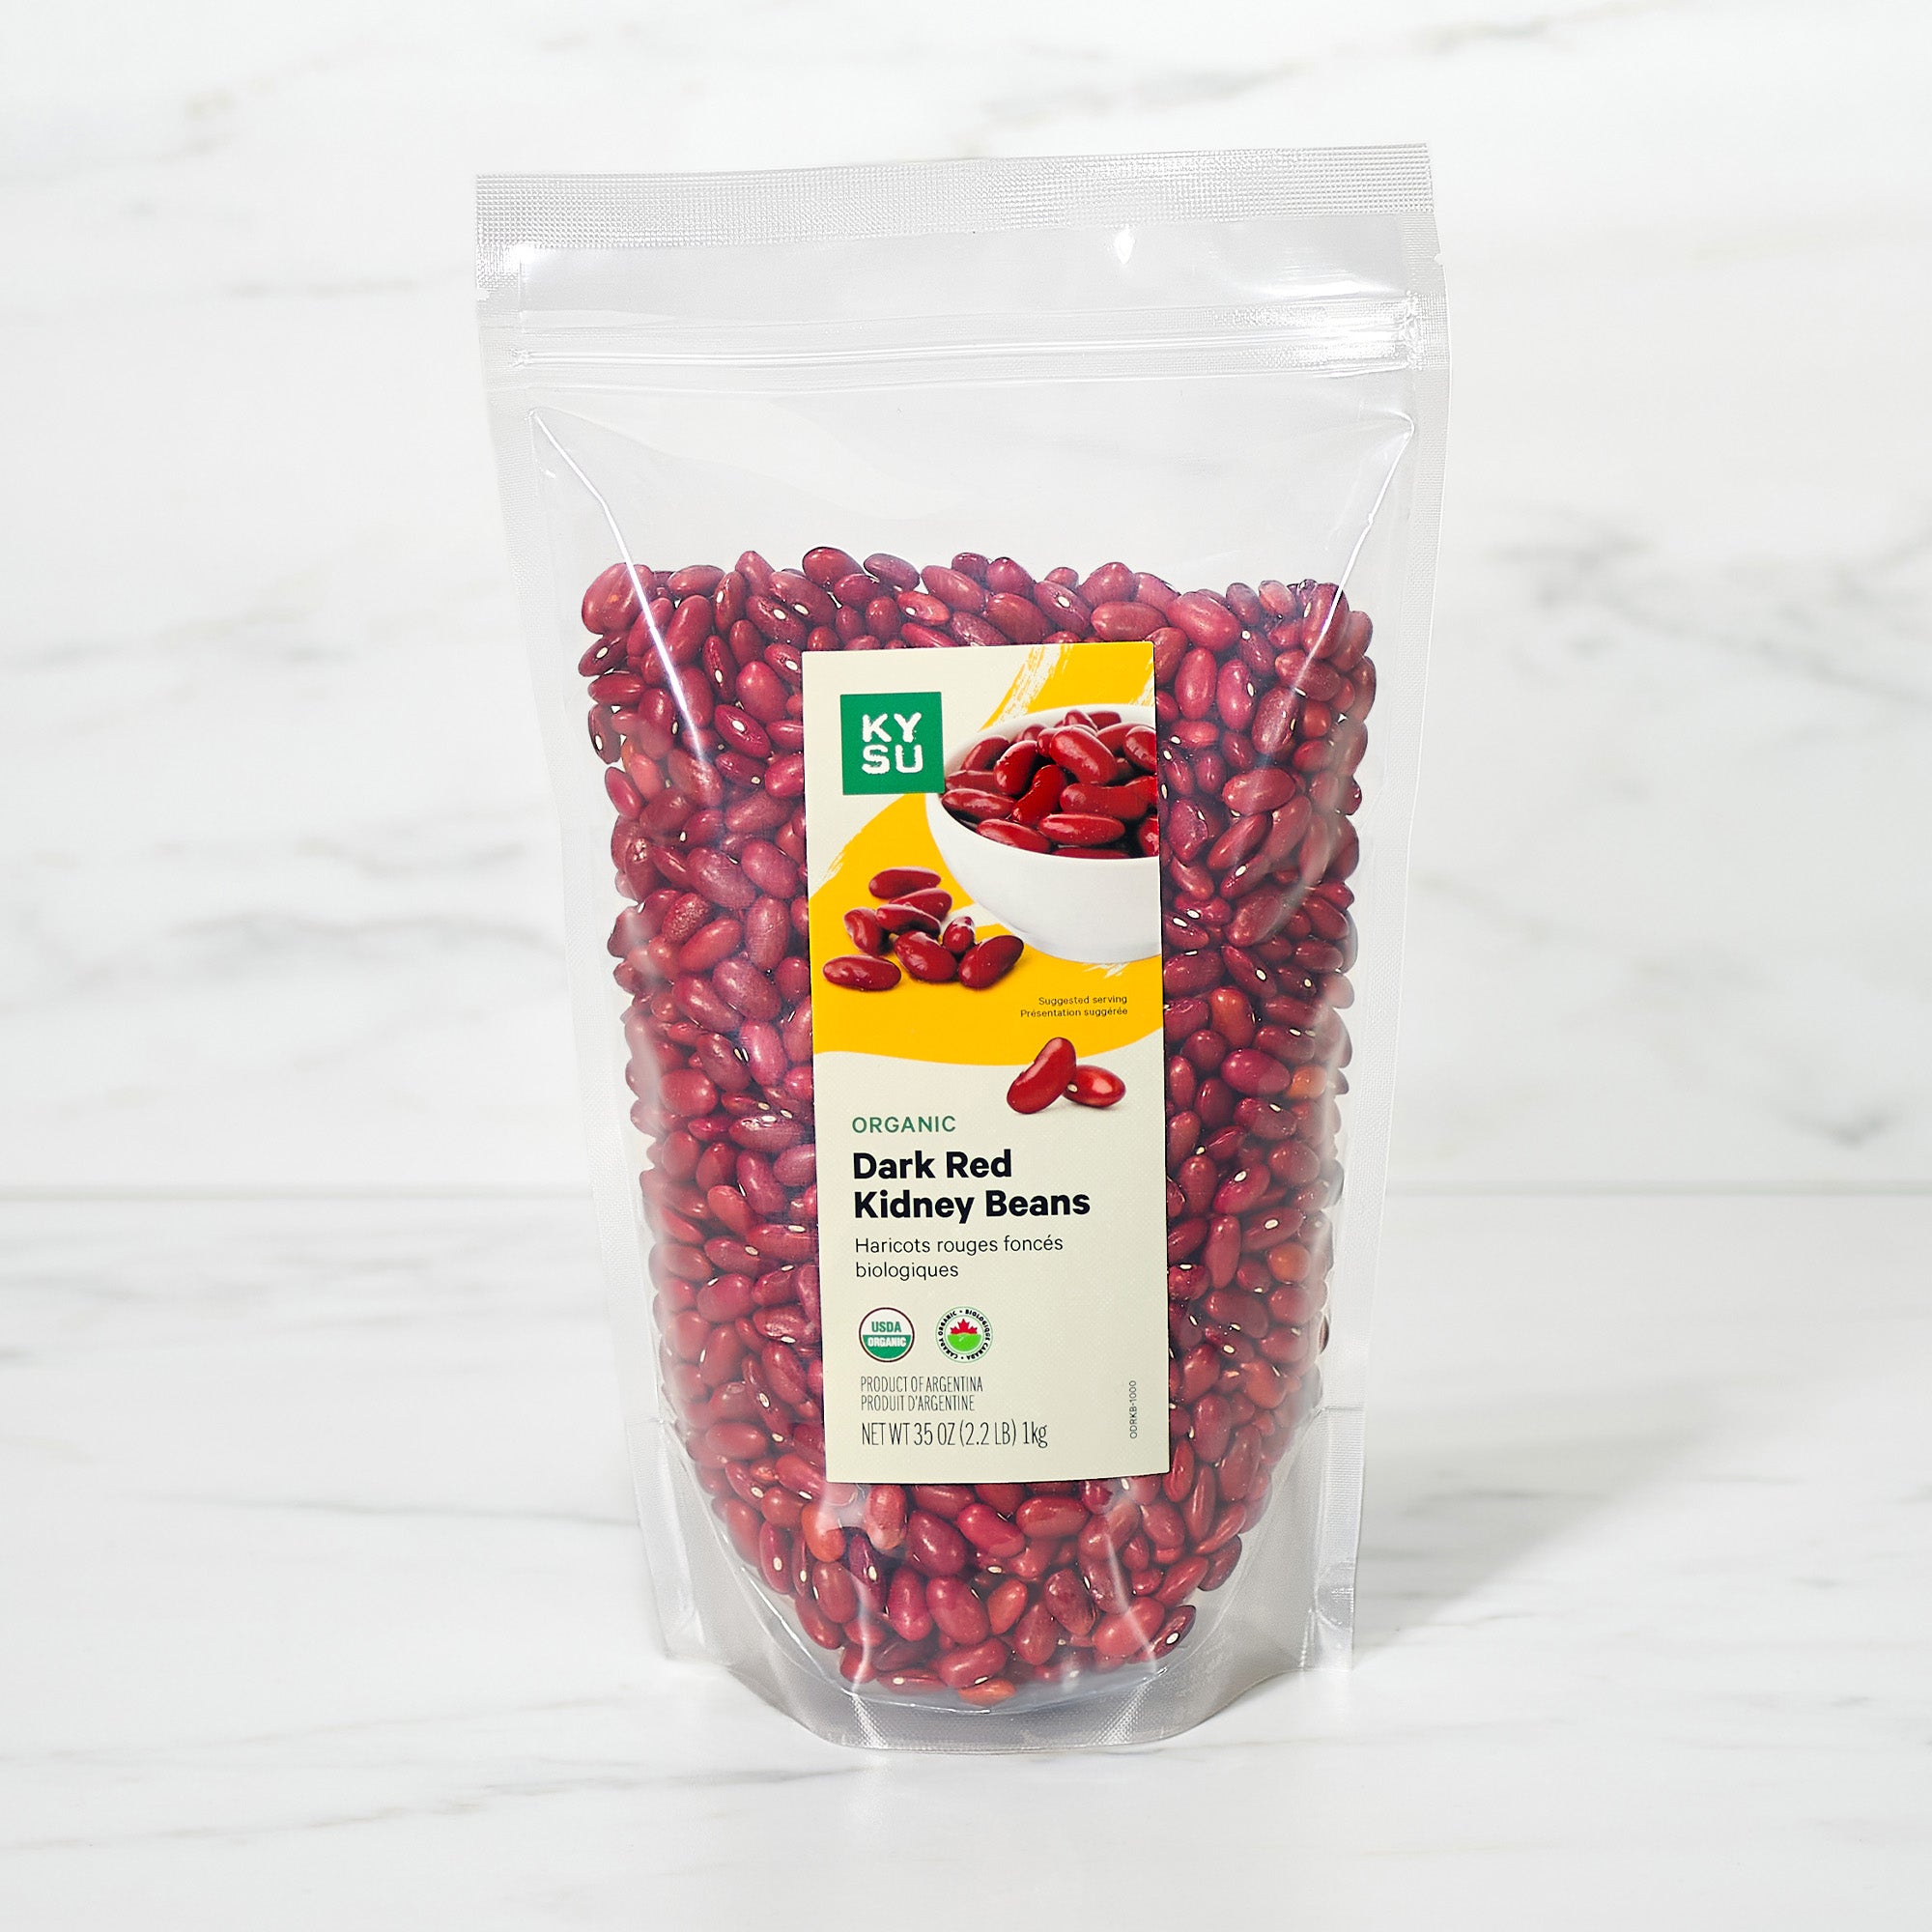 Organic dark red kidney beans, 2.2 lb